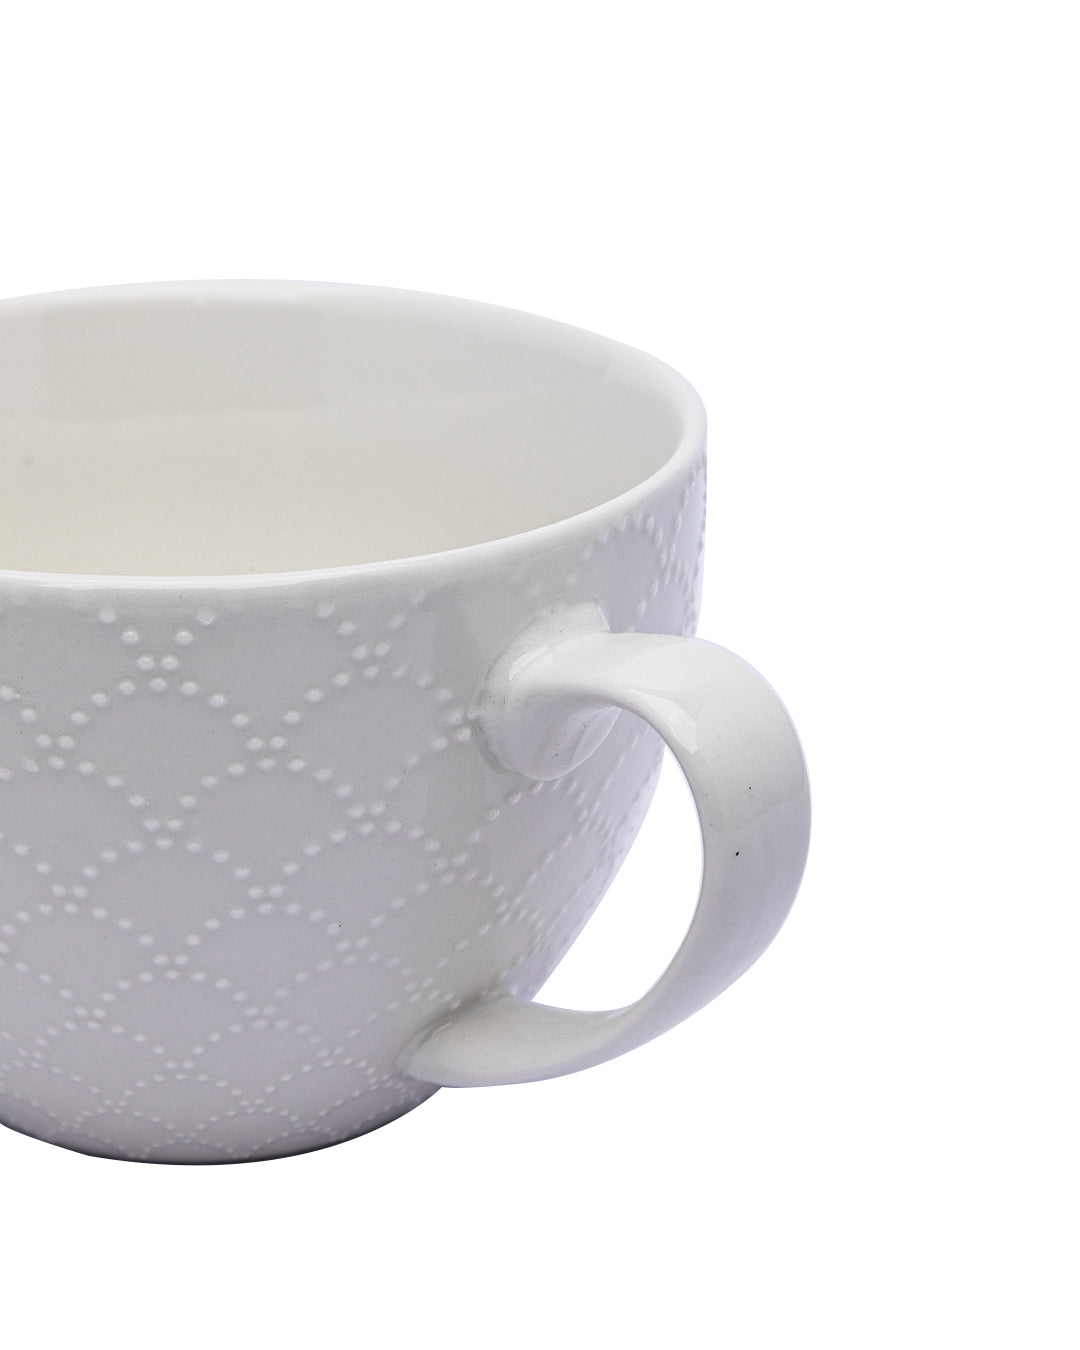 VON CASA Honey Embossed Tea & Coffee Mug - Set of 2, 460 mL